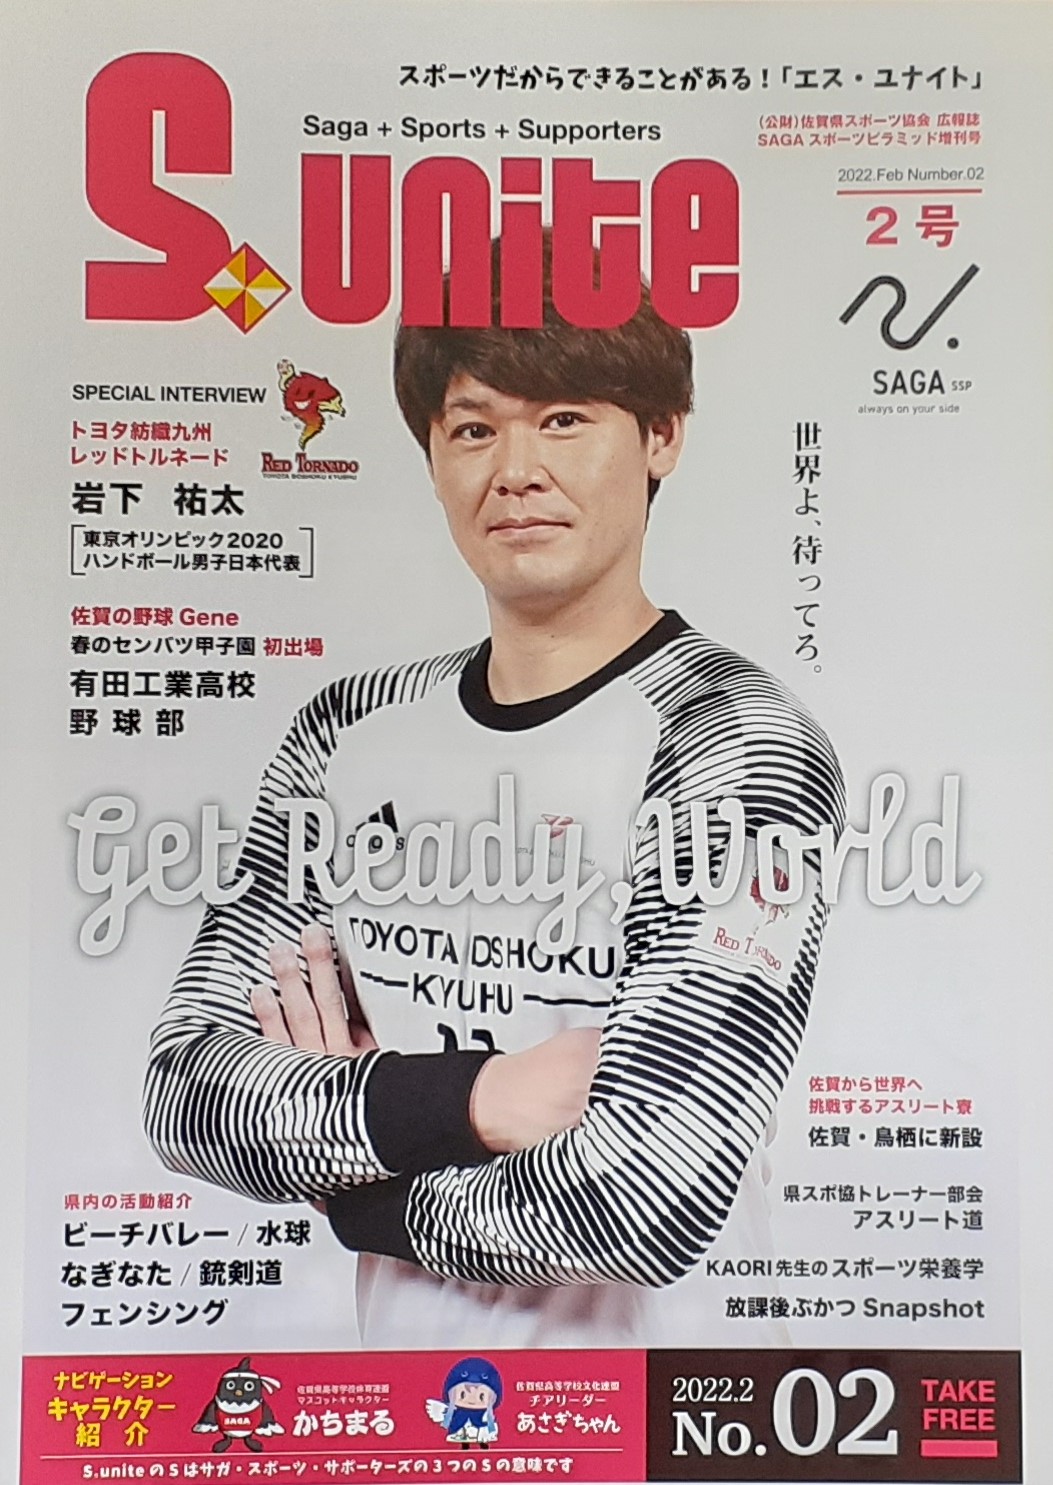 GK岩下選手、佐賀県スポーツ協会広報誌「エス・ユナイト」に登場！佐賀県内の中高生全員に配布されます